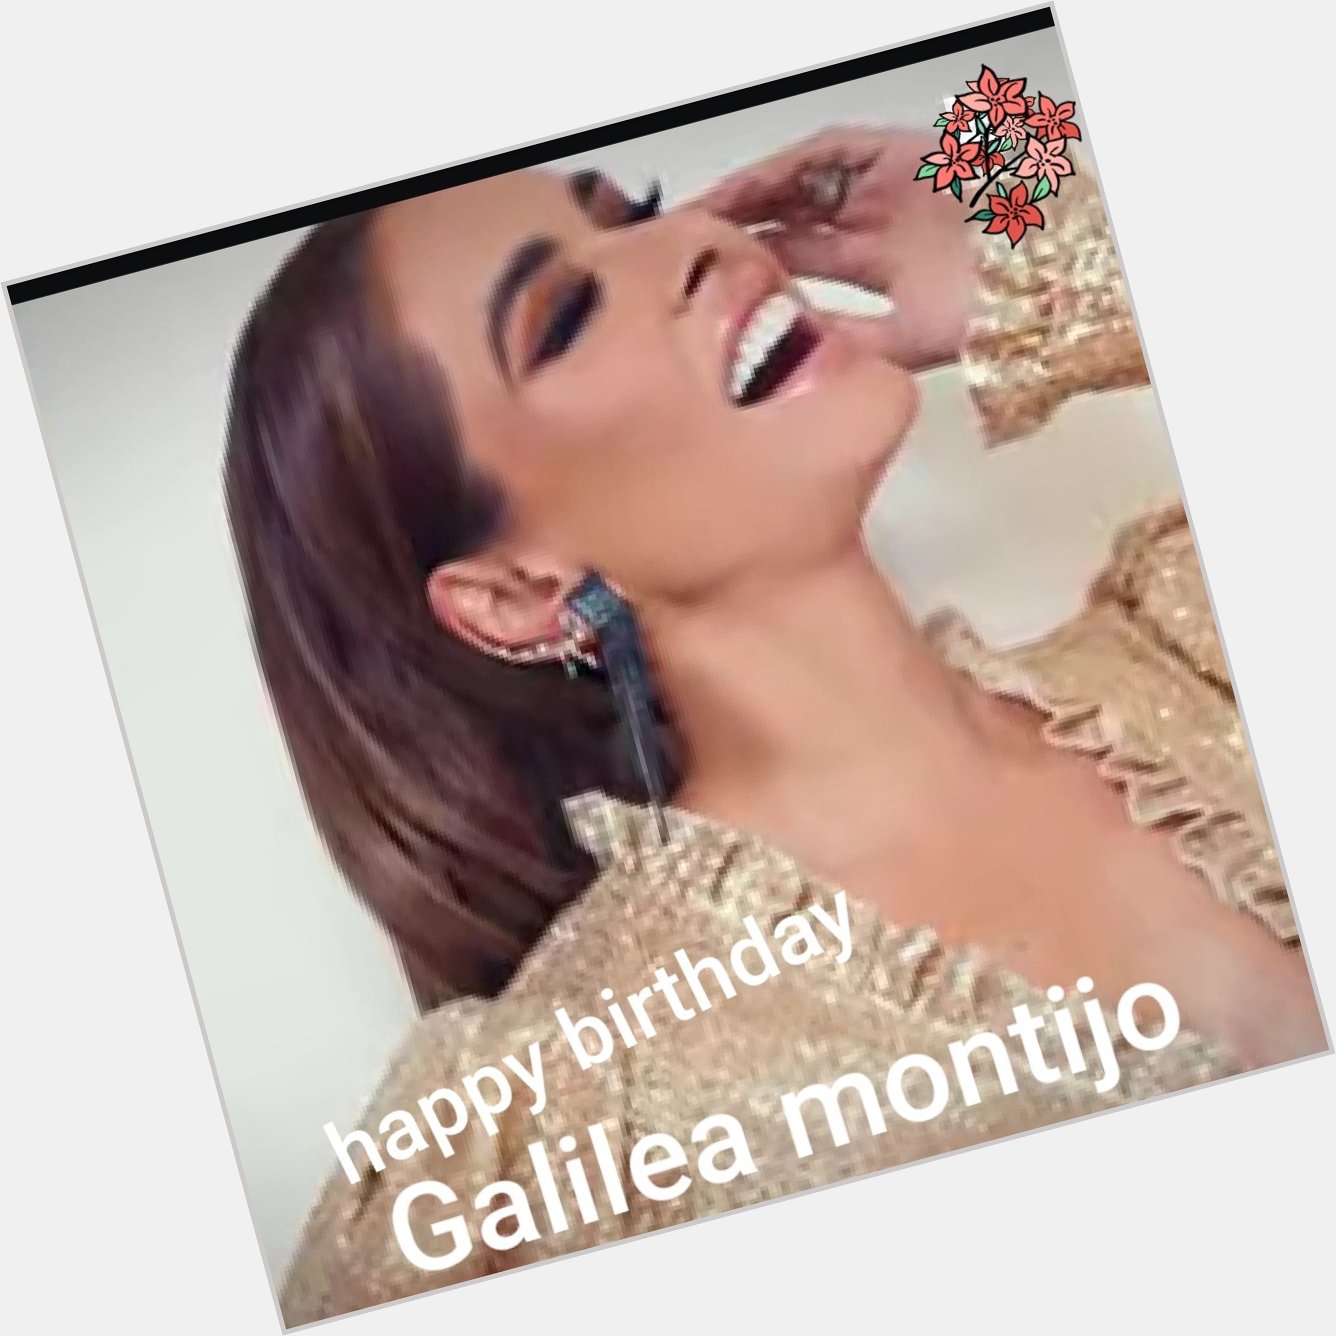 Happy birthday Galilea montijo 